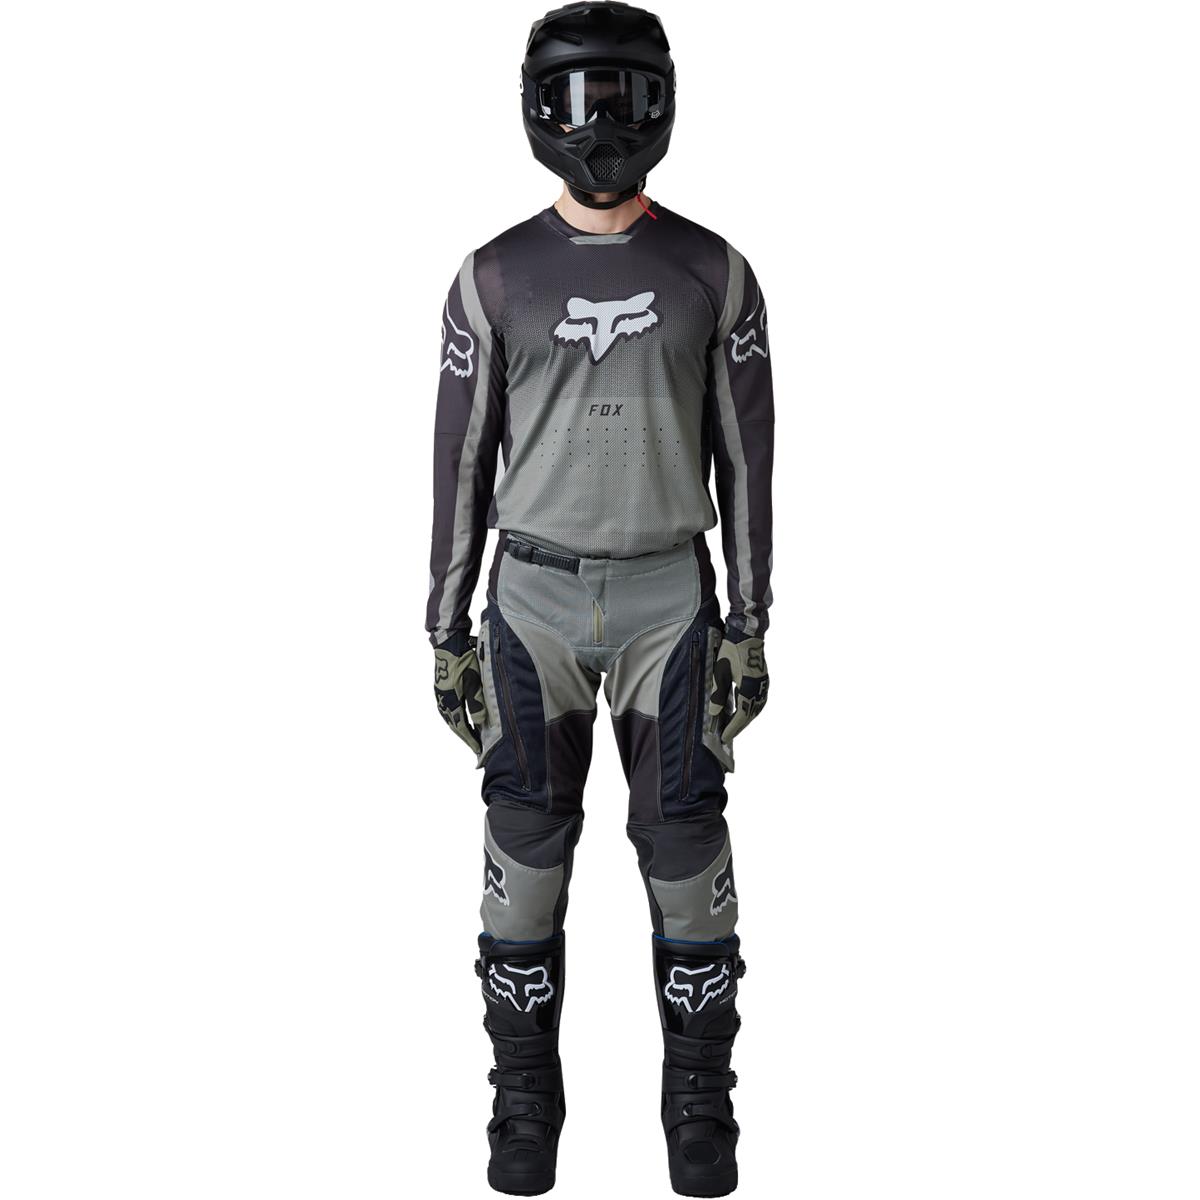 Fox MX Gear Kit Ranger Air Off Road Set: 2 pieces, Adobe